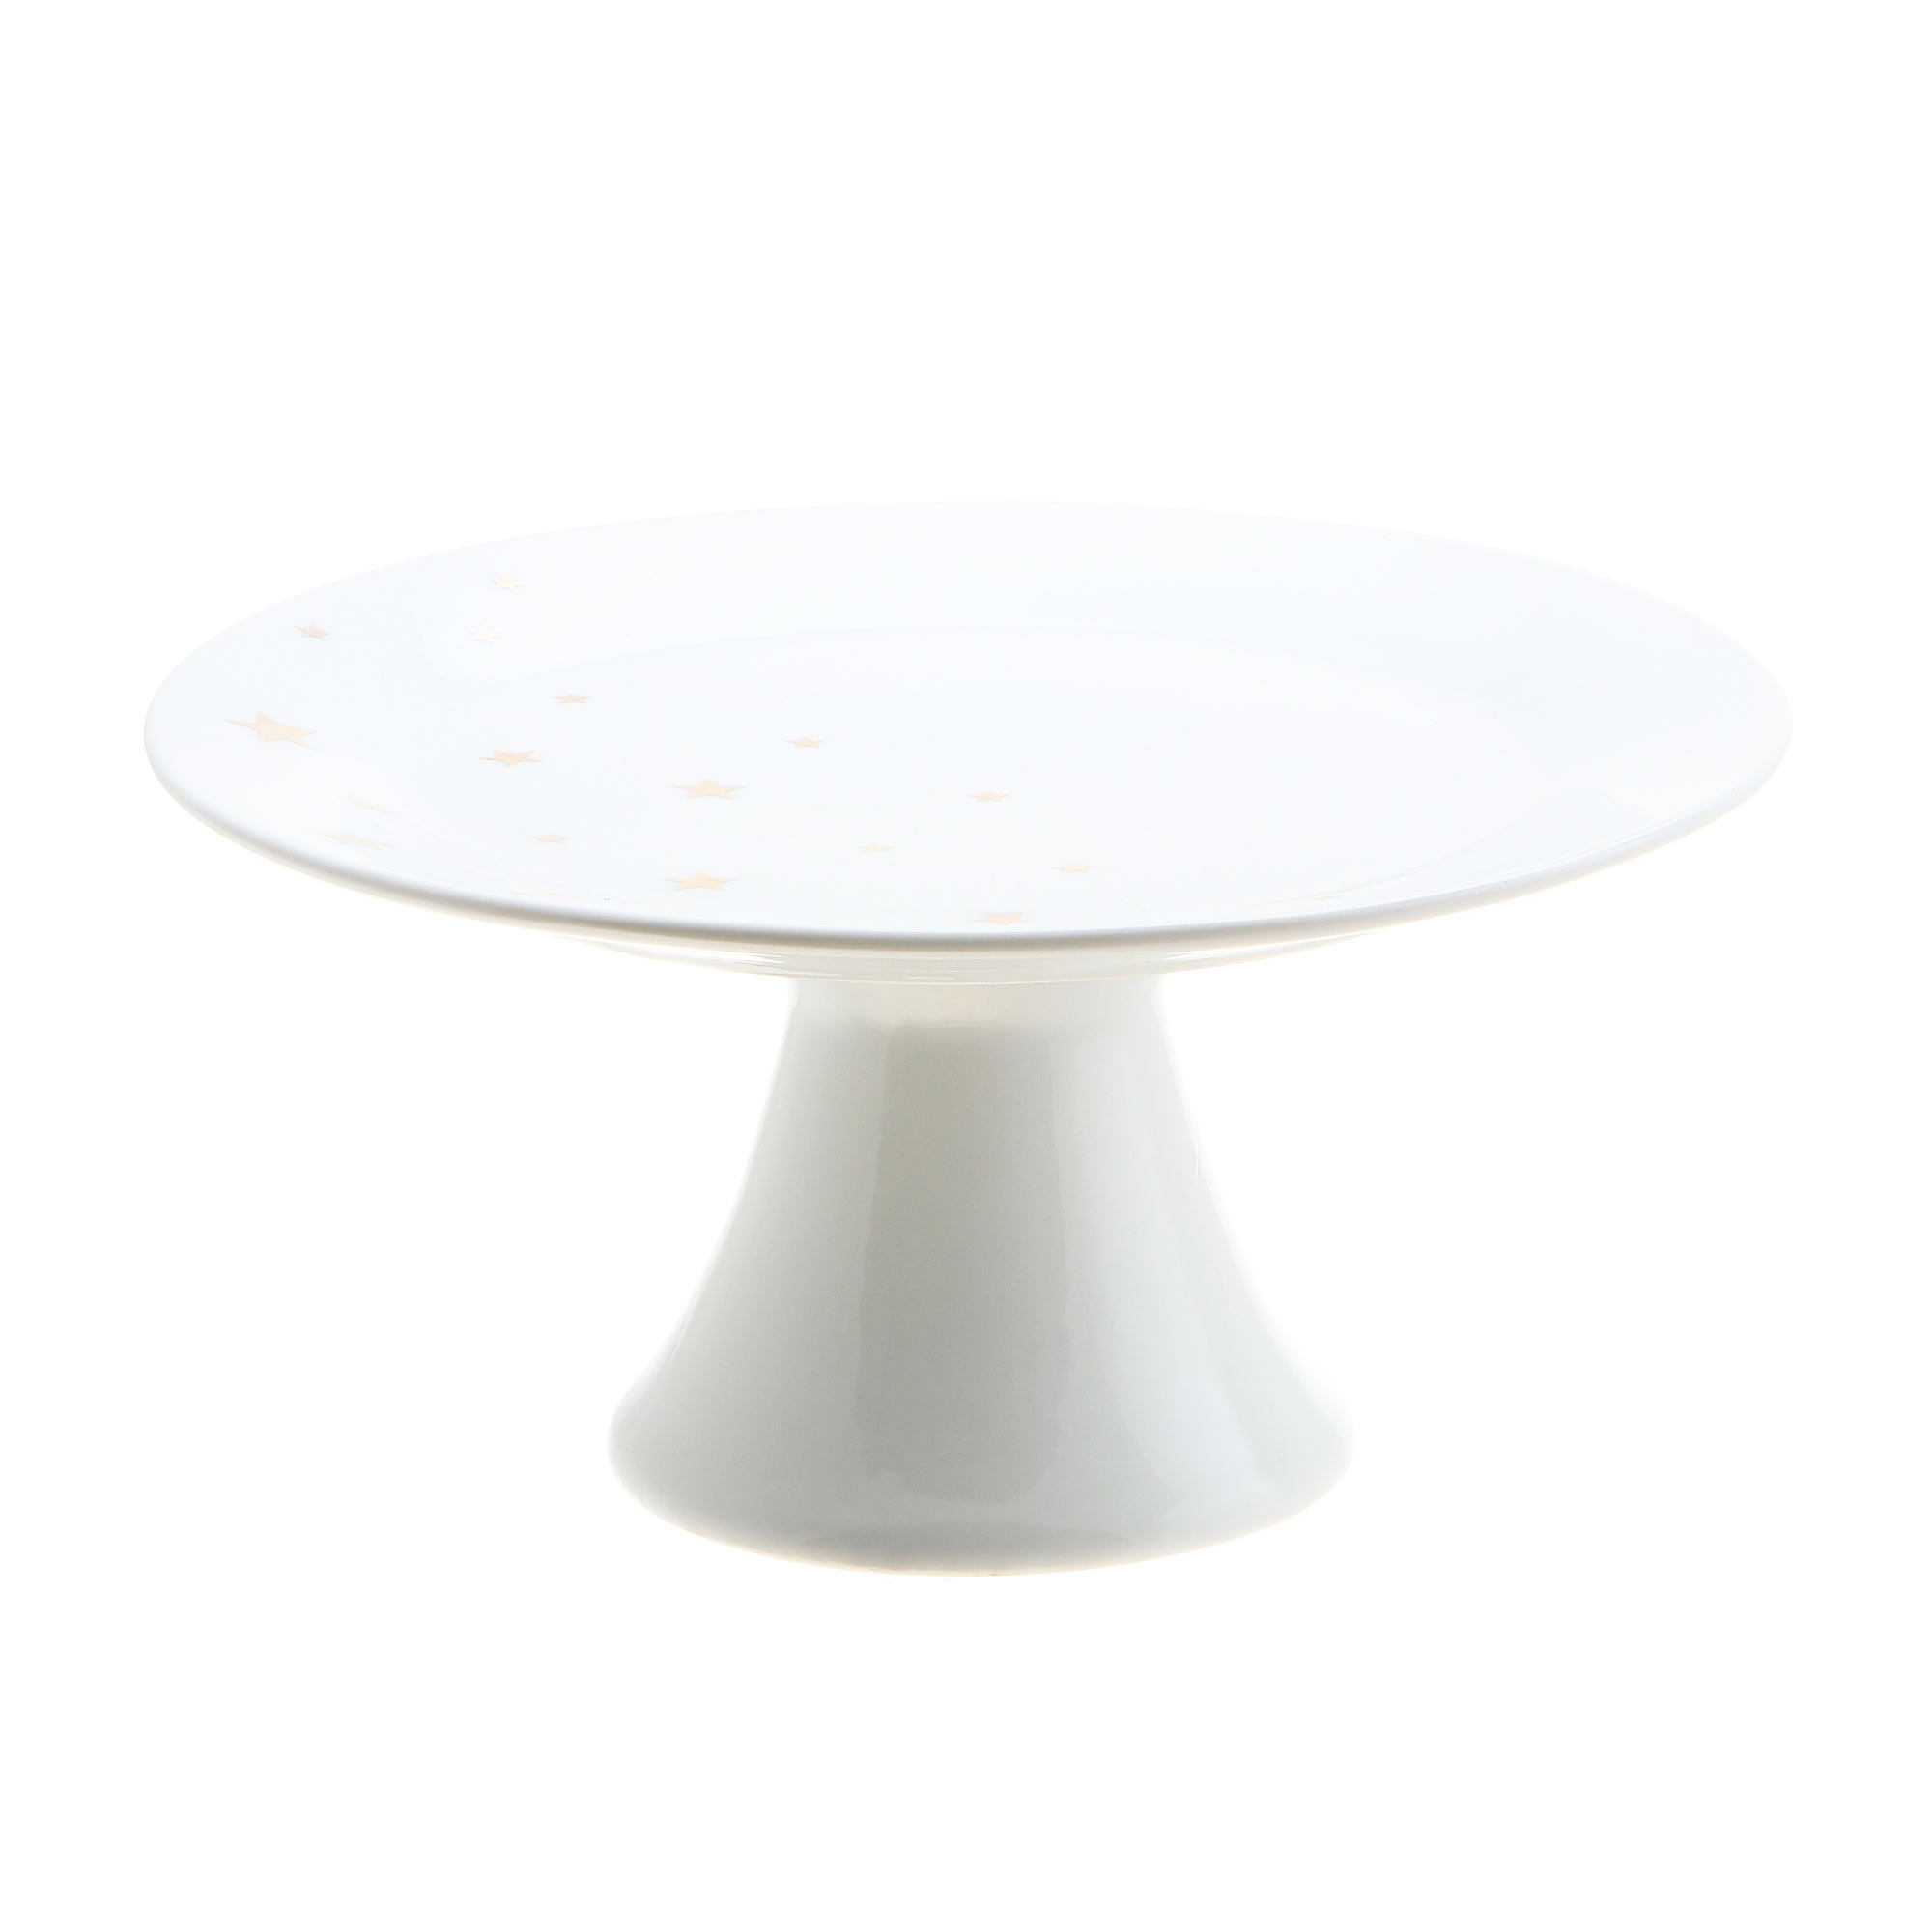 Тортница Koopman tableware фарфор 21x10 см, цвет белый - фото 1